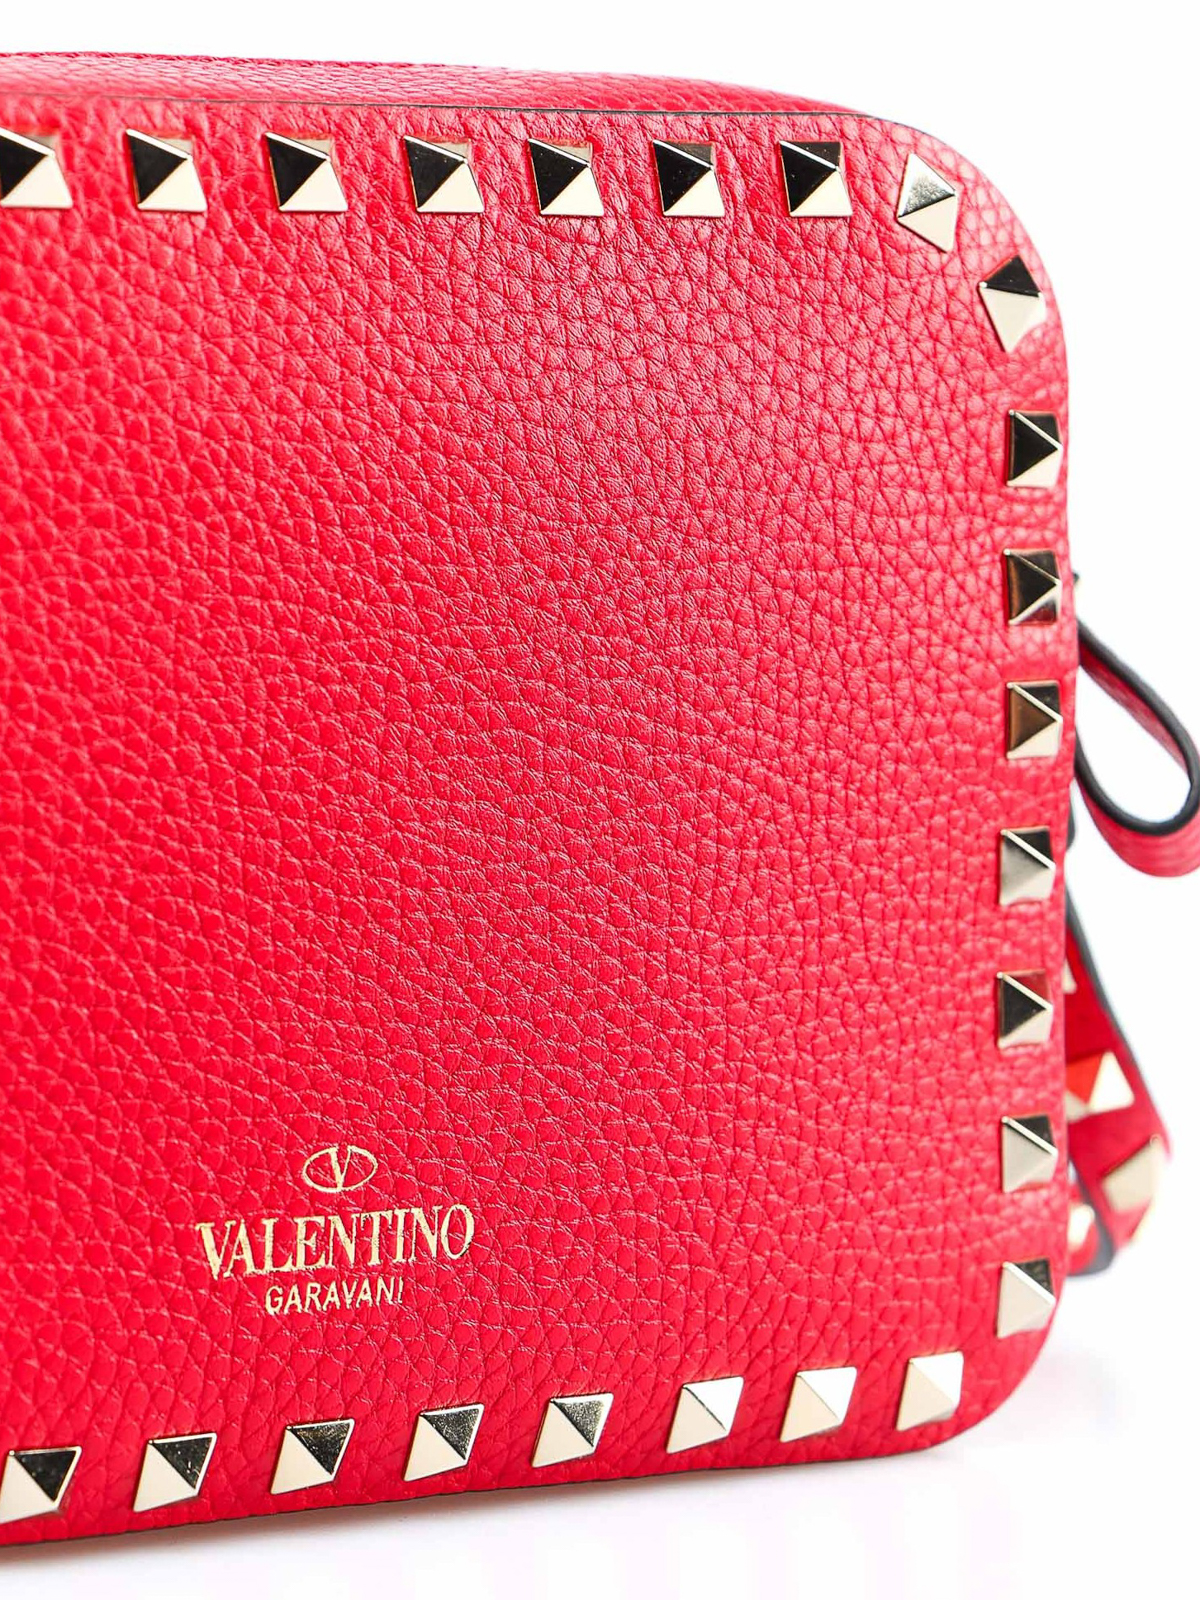 Valentino Garavani Bag Red Mini Rock Stud Clutch Cross Body Wallet